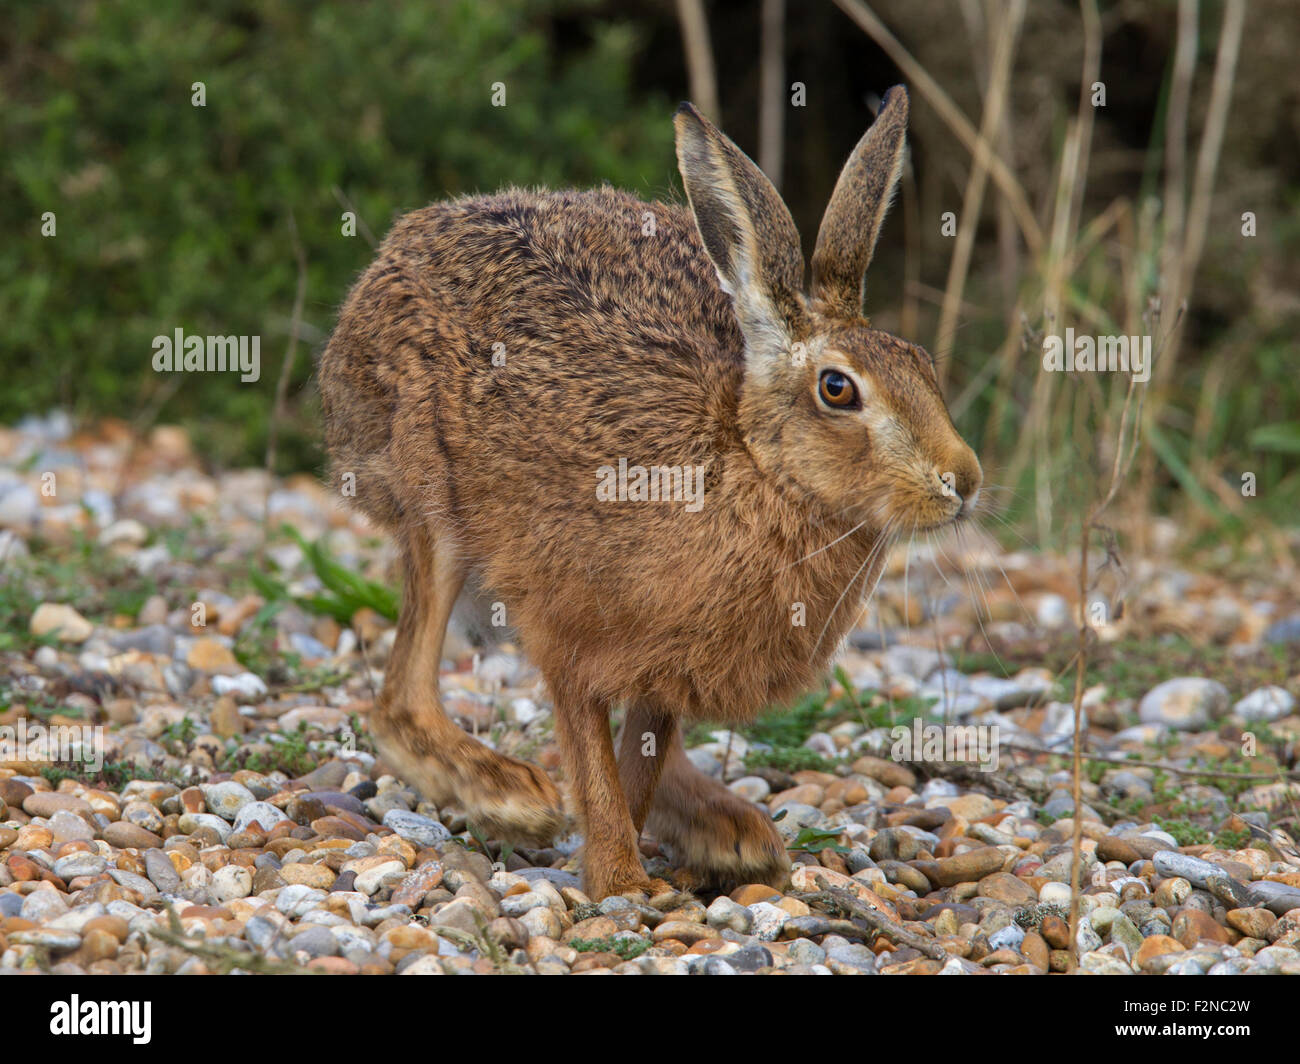 European brown hare, exécutant Banque D'Images